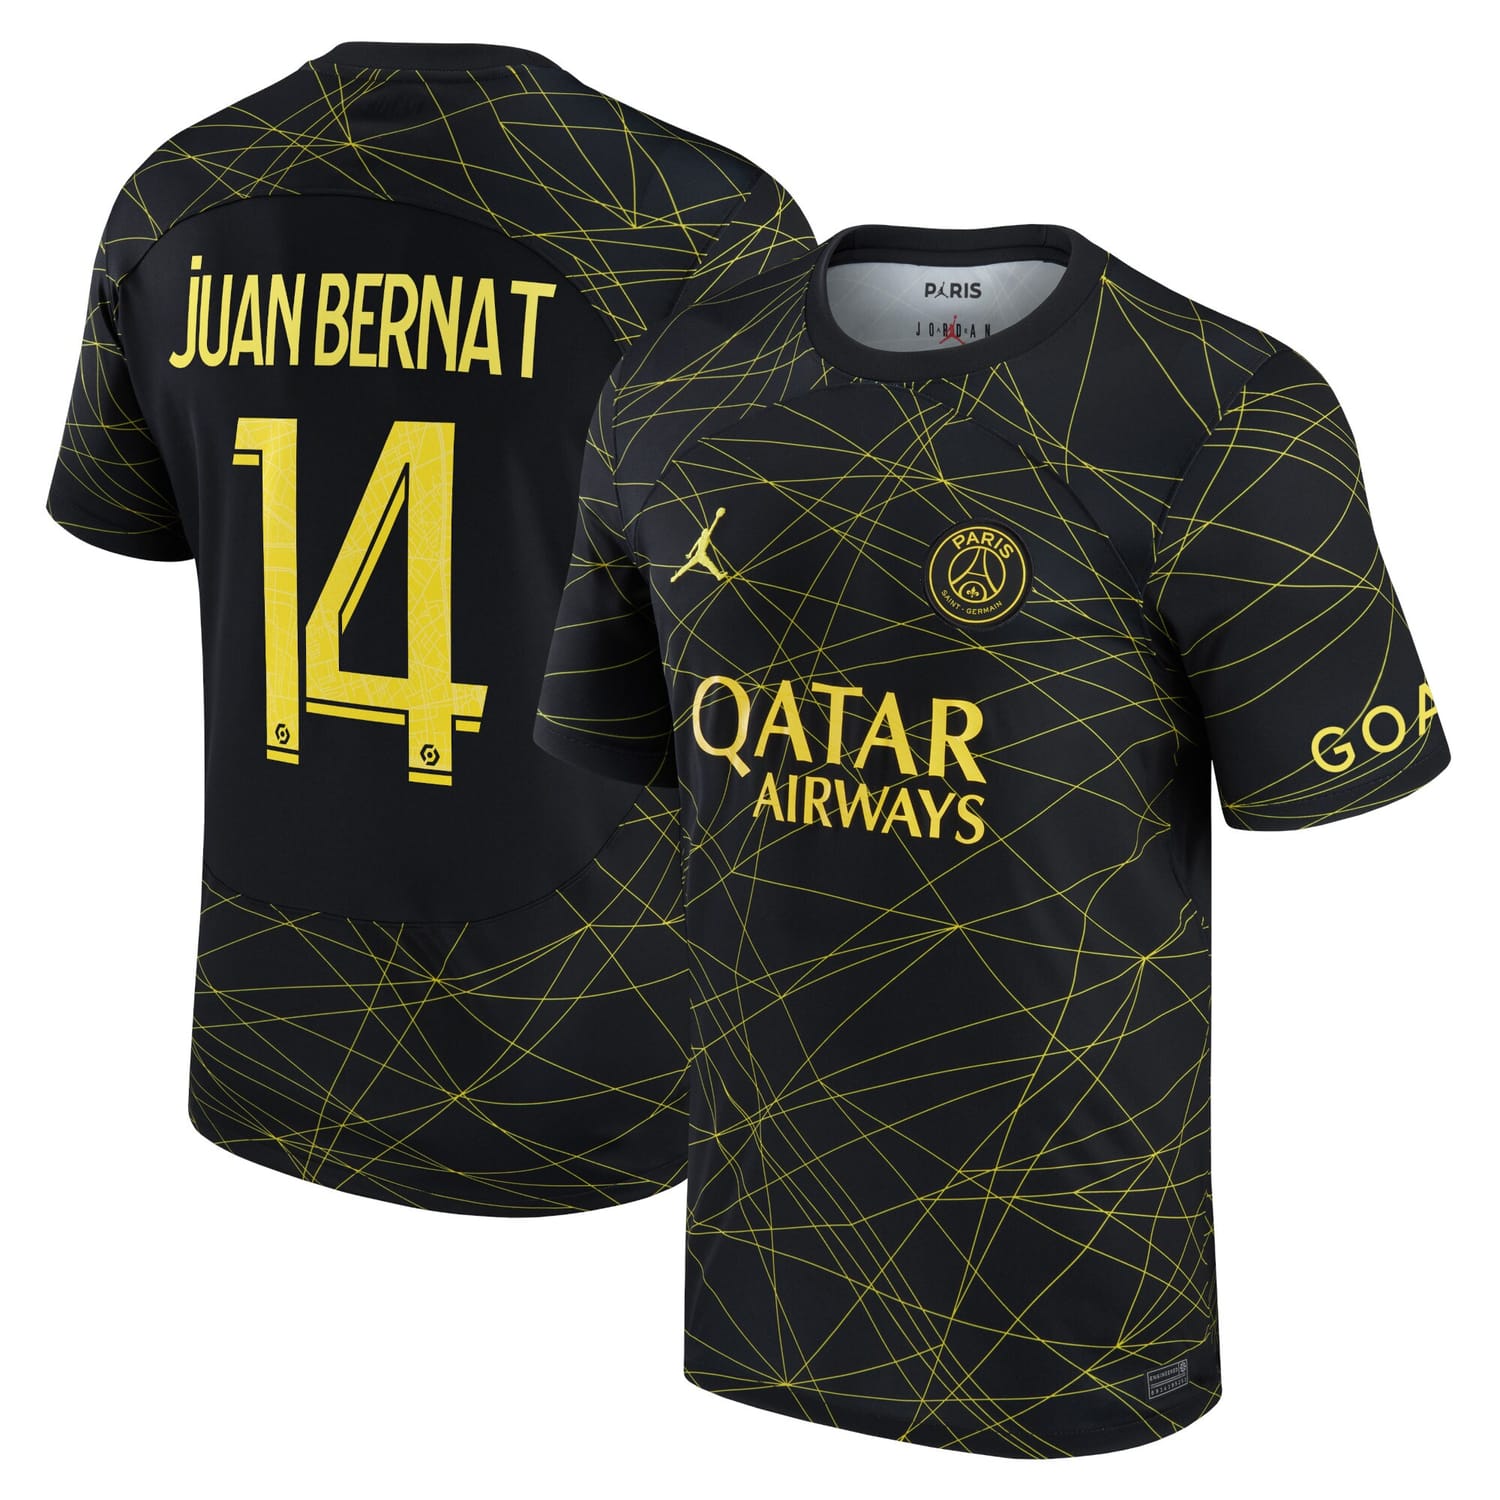 Ligue 1 Paris Saint-Germain Fourth Jersey Shirt 2022-23 player Juan Bernat 14 printing for Men